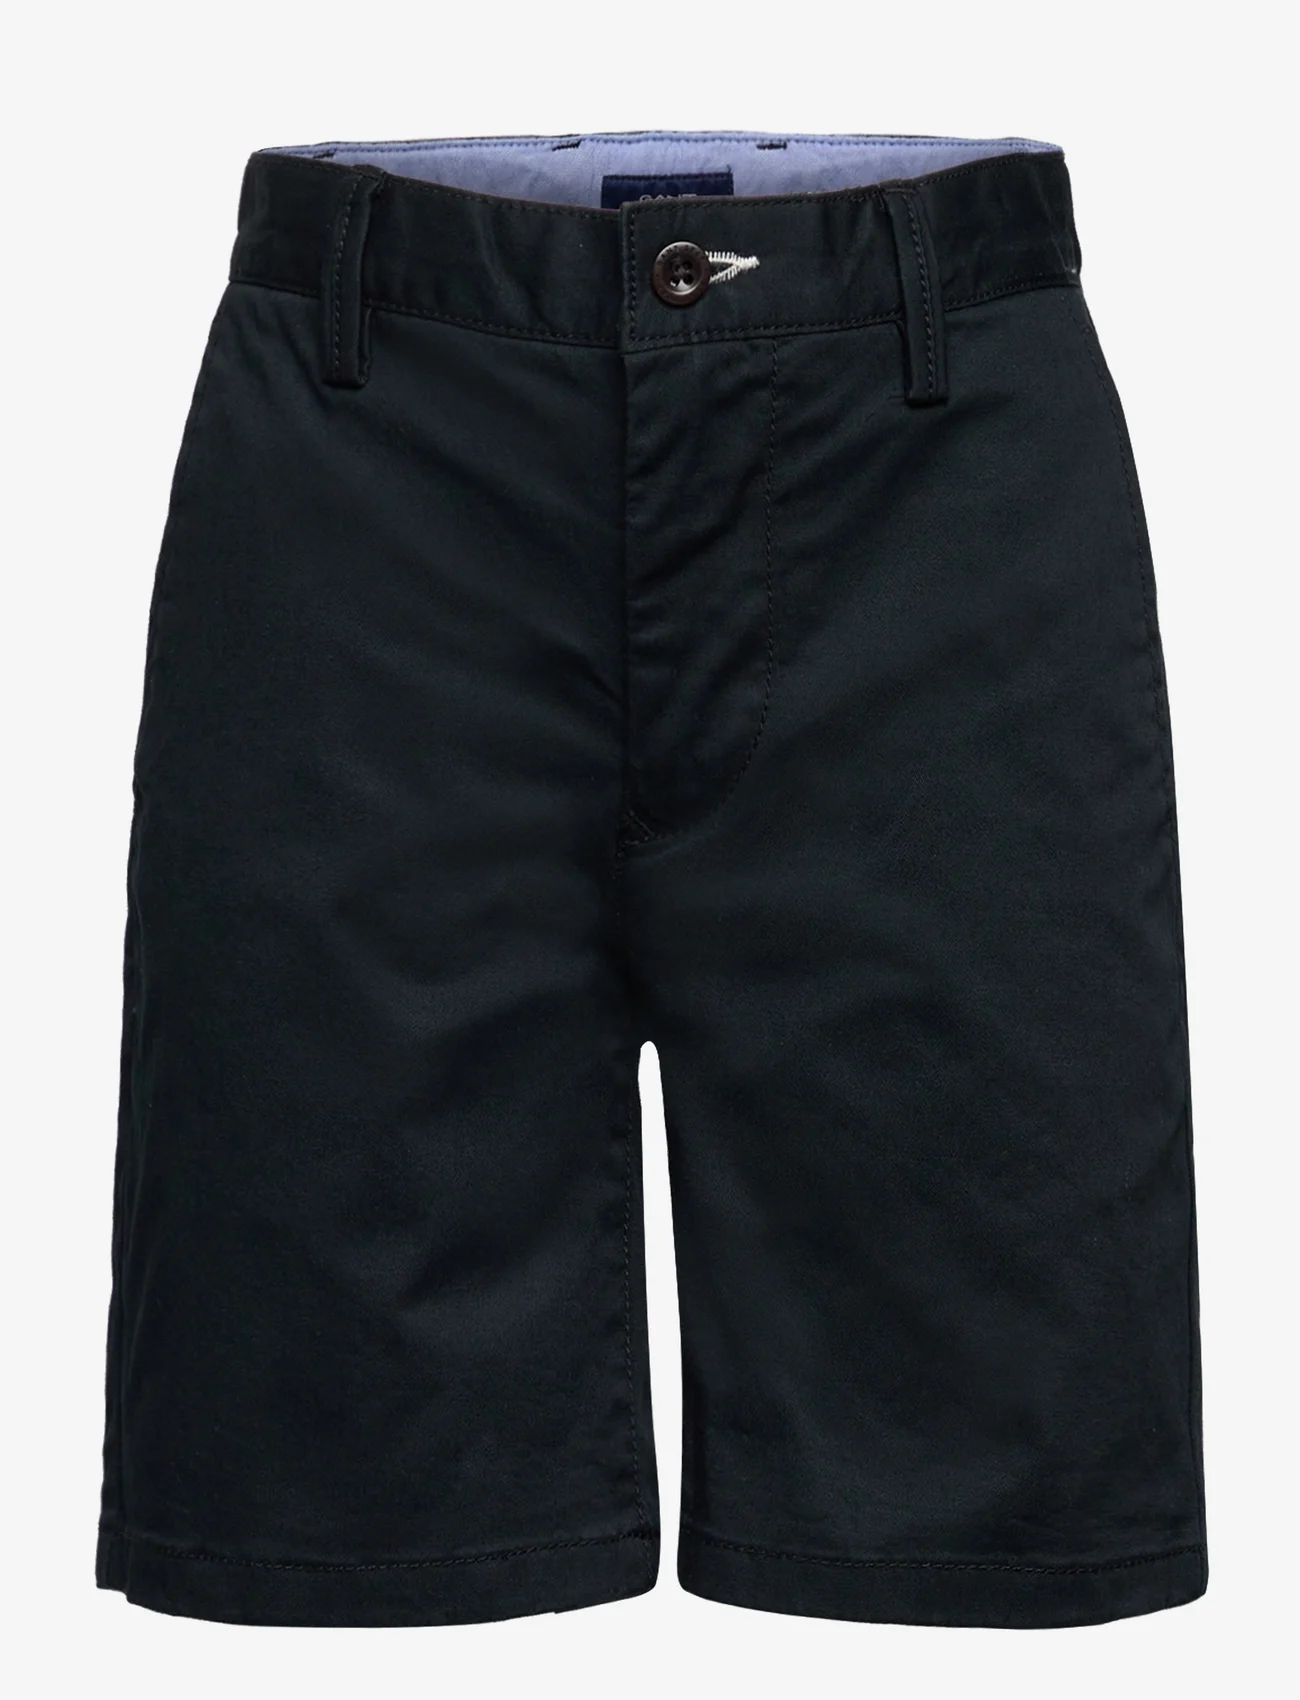 GANT - CHINOS SHORTS - chino shorts - black - 0